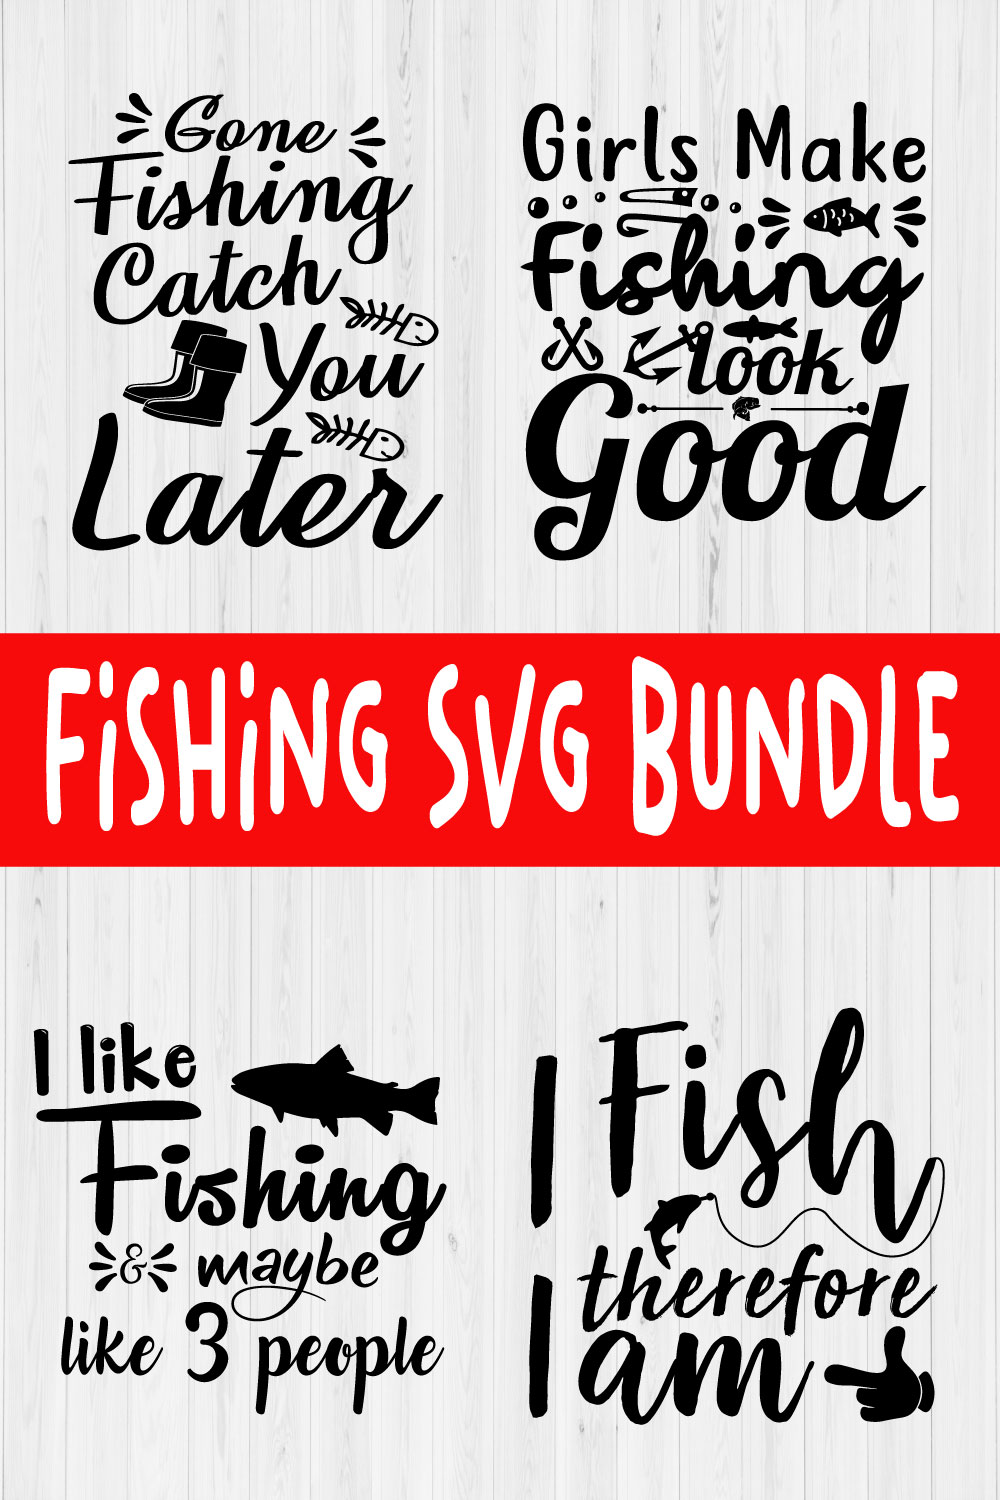 Fishing Svg Bundle Vol7 pinterest preview image.